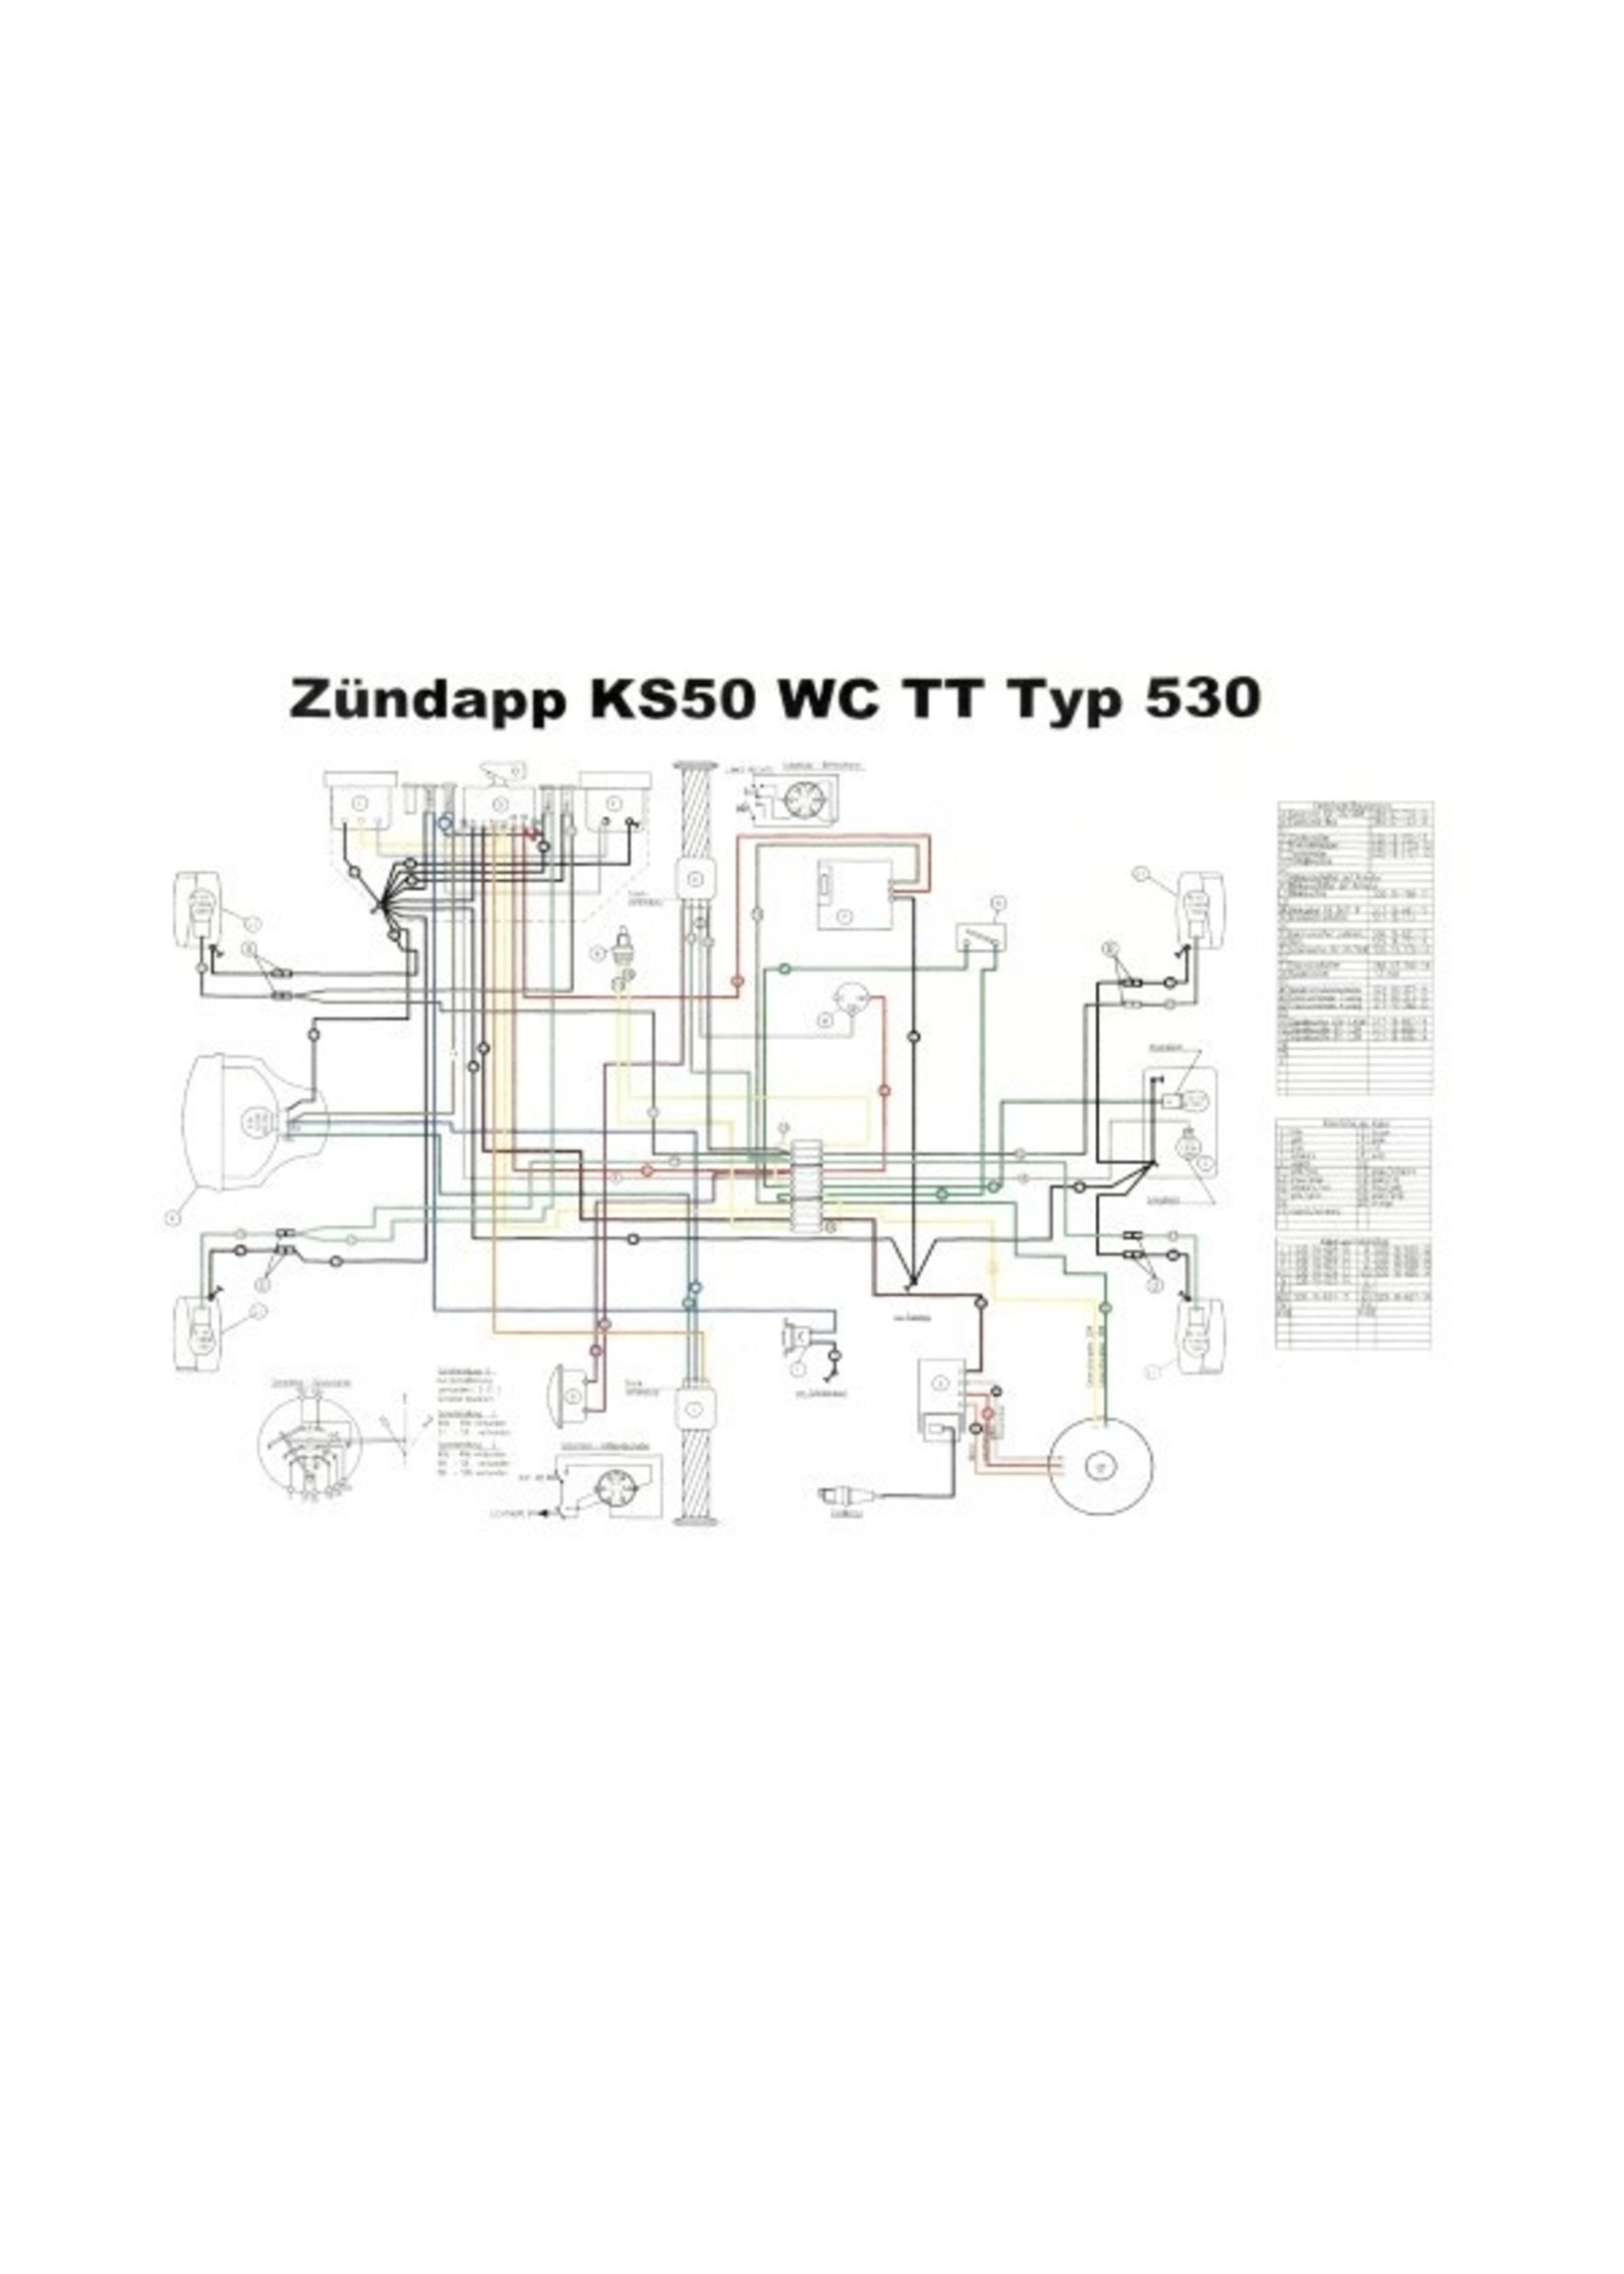 Zundapp kabelboom ks50 lc model 530 - Copy